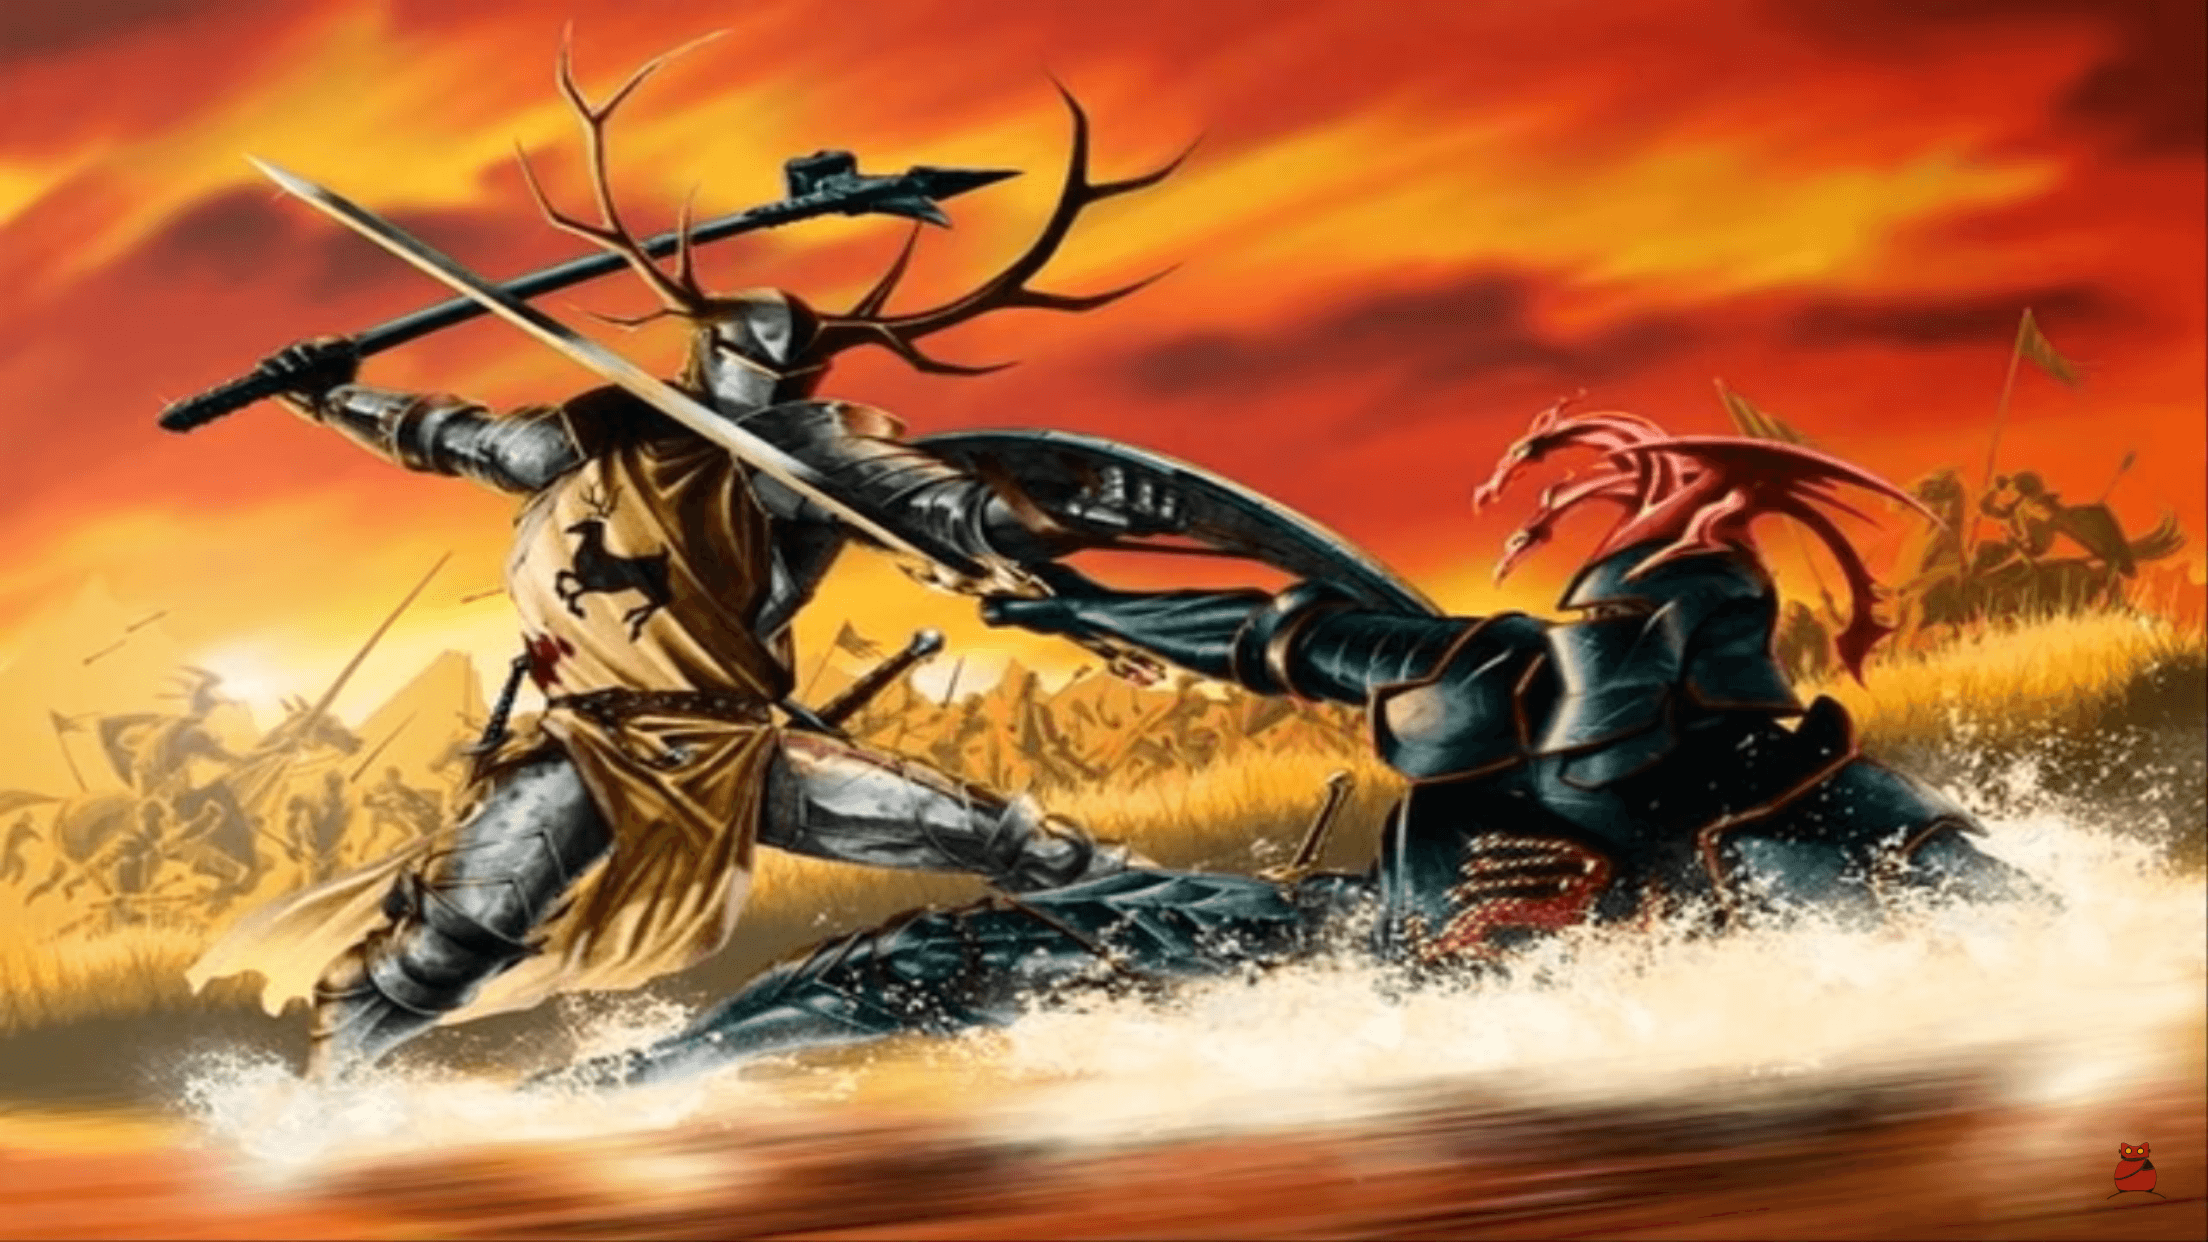 Battle of the Trident Baratheon and Rhaegar Targaryen. A